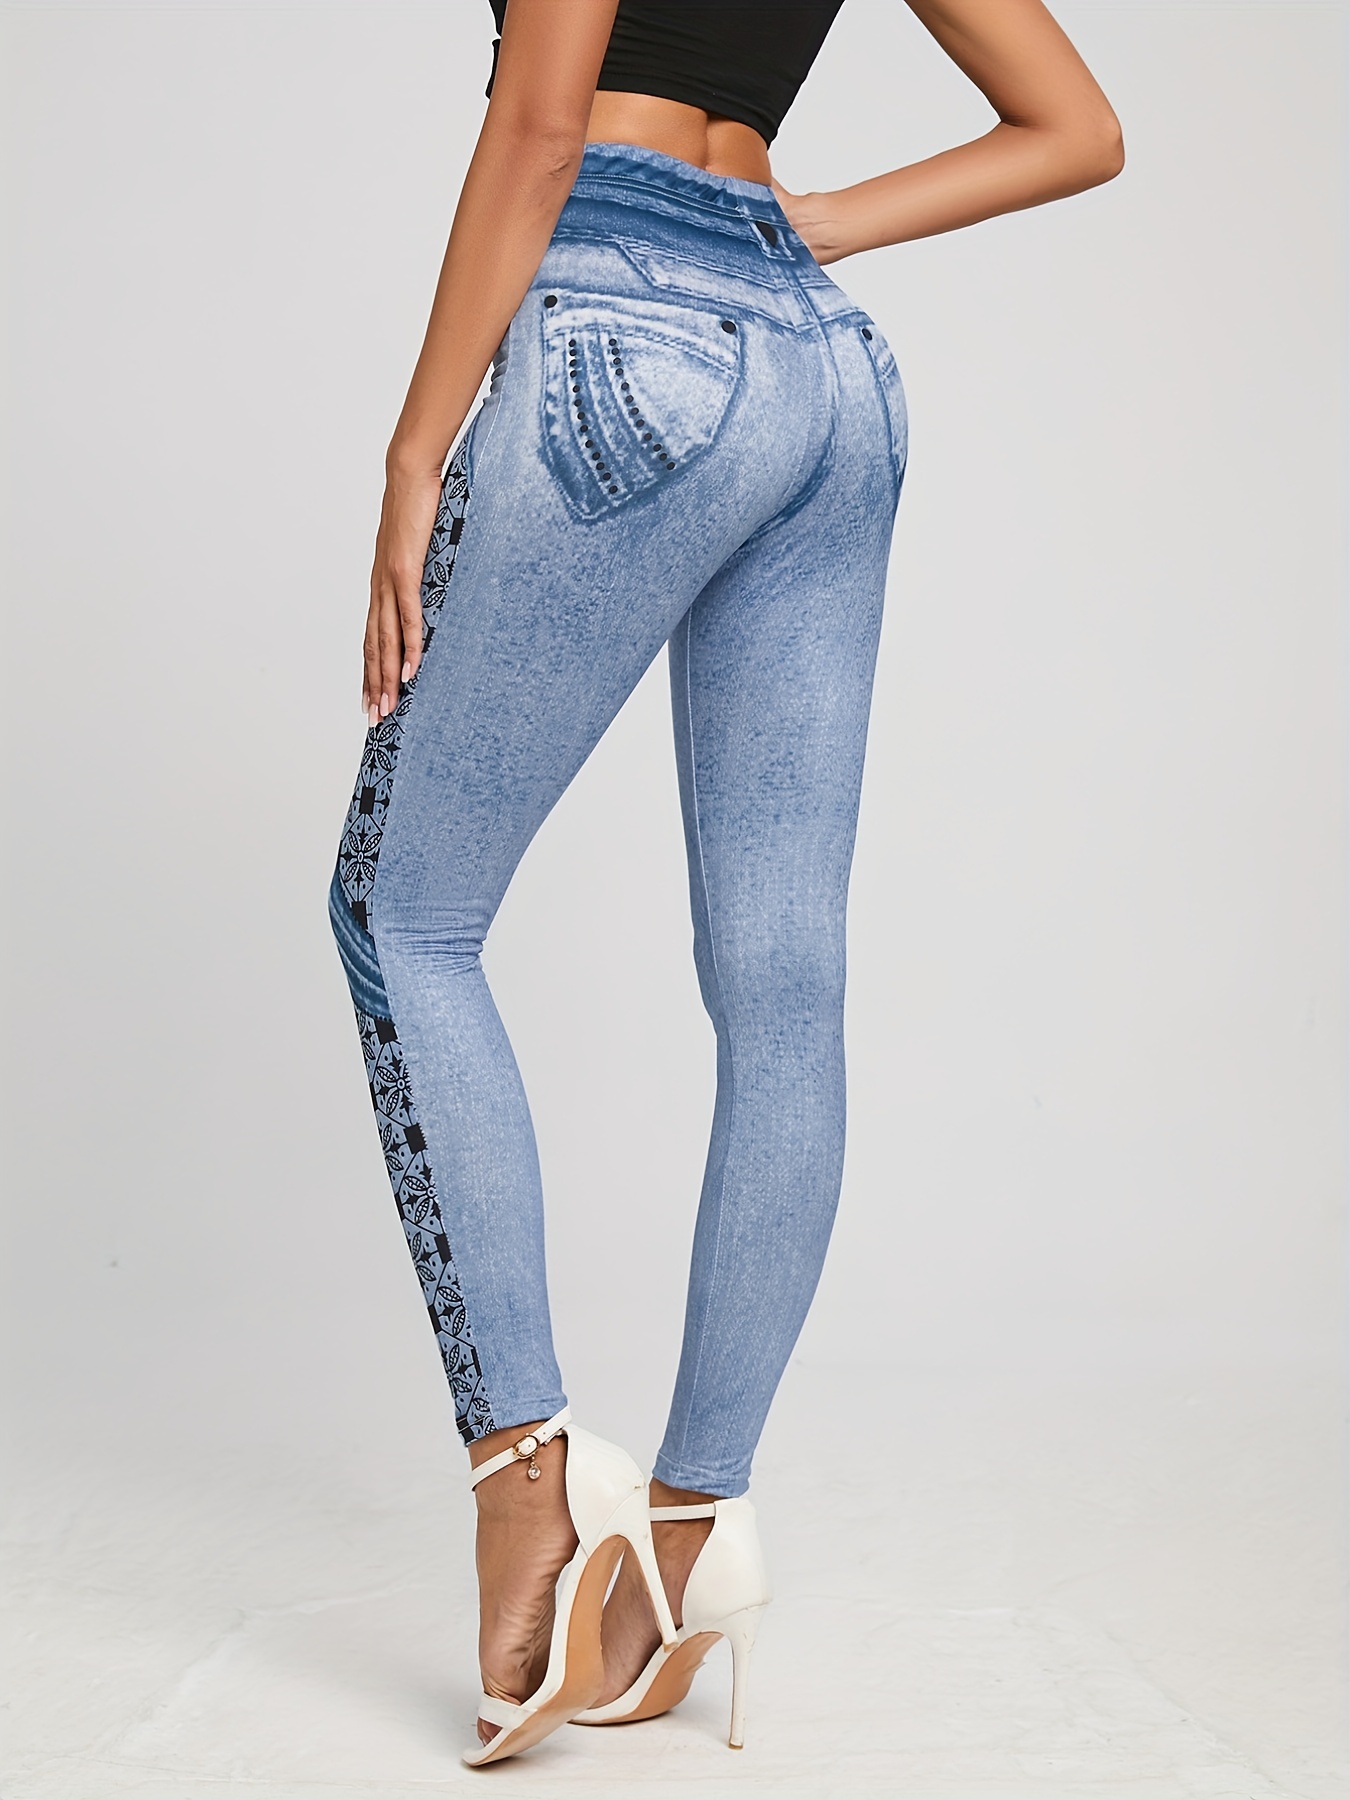 MAYW Stretchy Comfy Seamless Skinny Denim Print Fake Jeans,Women's